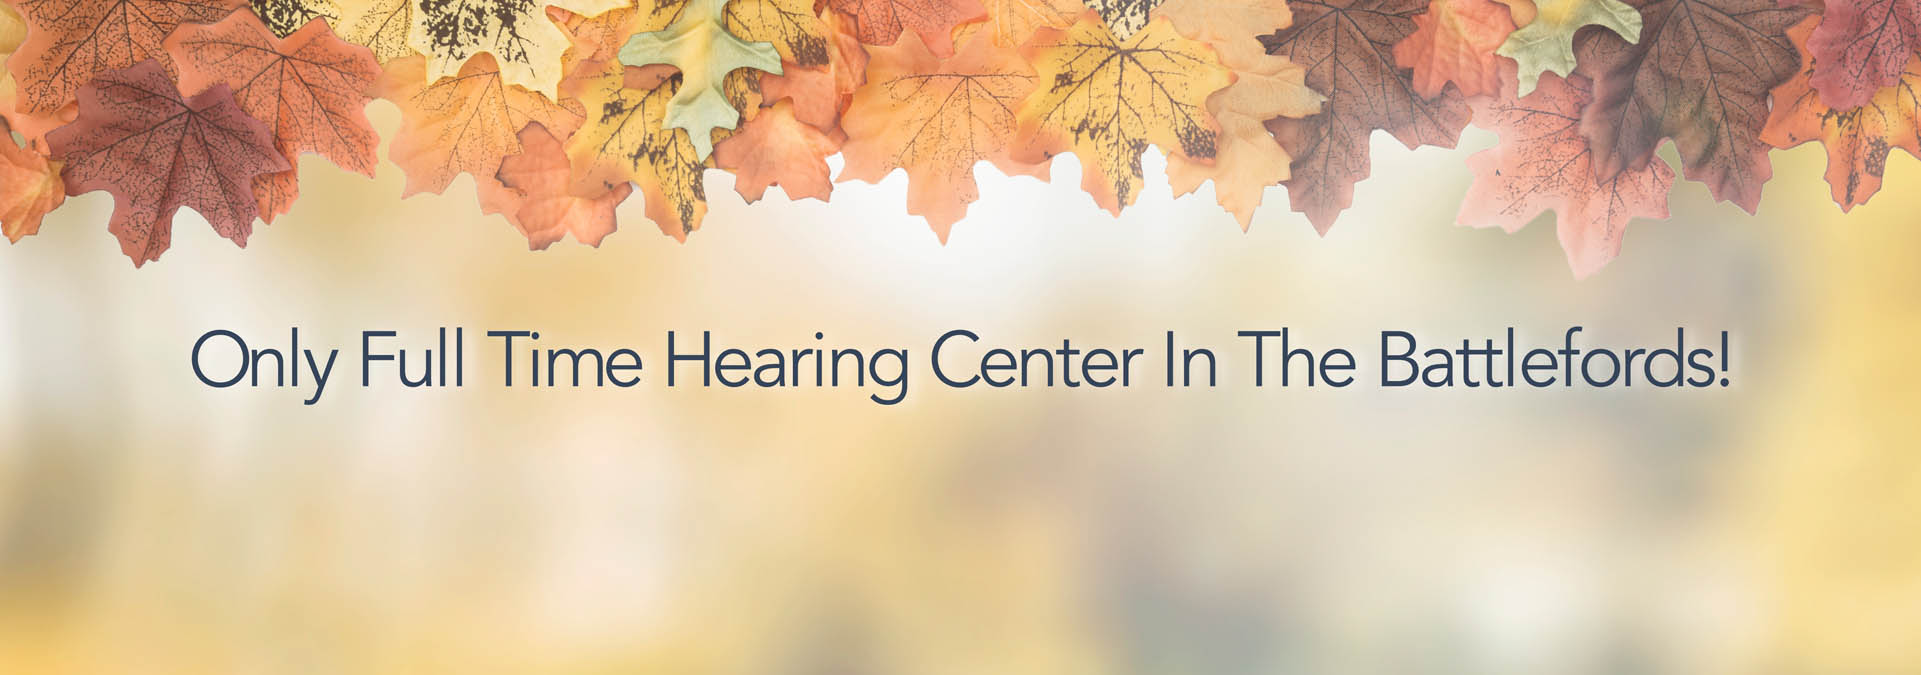 Battlefords Hearing Centers